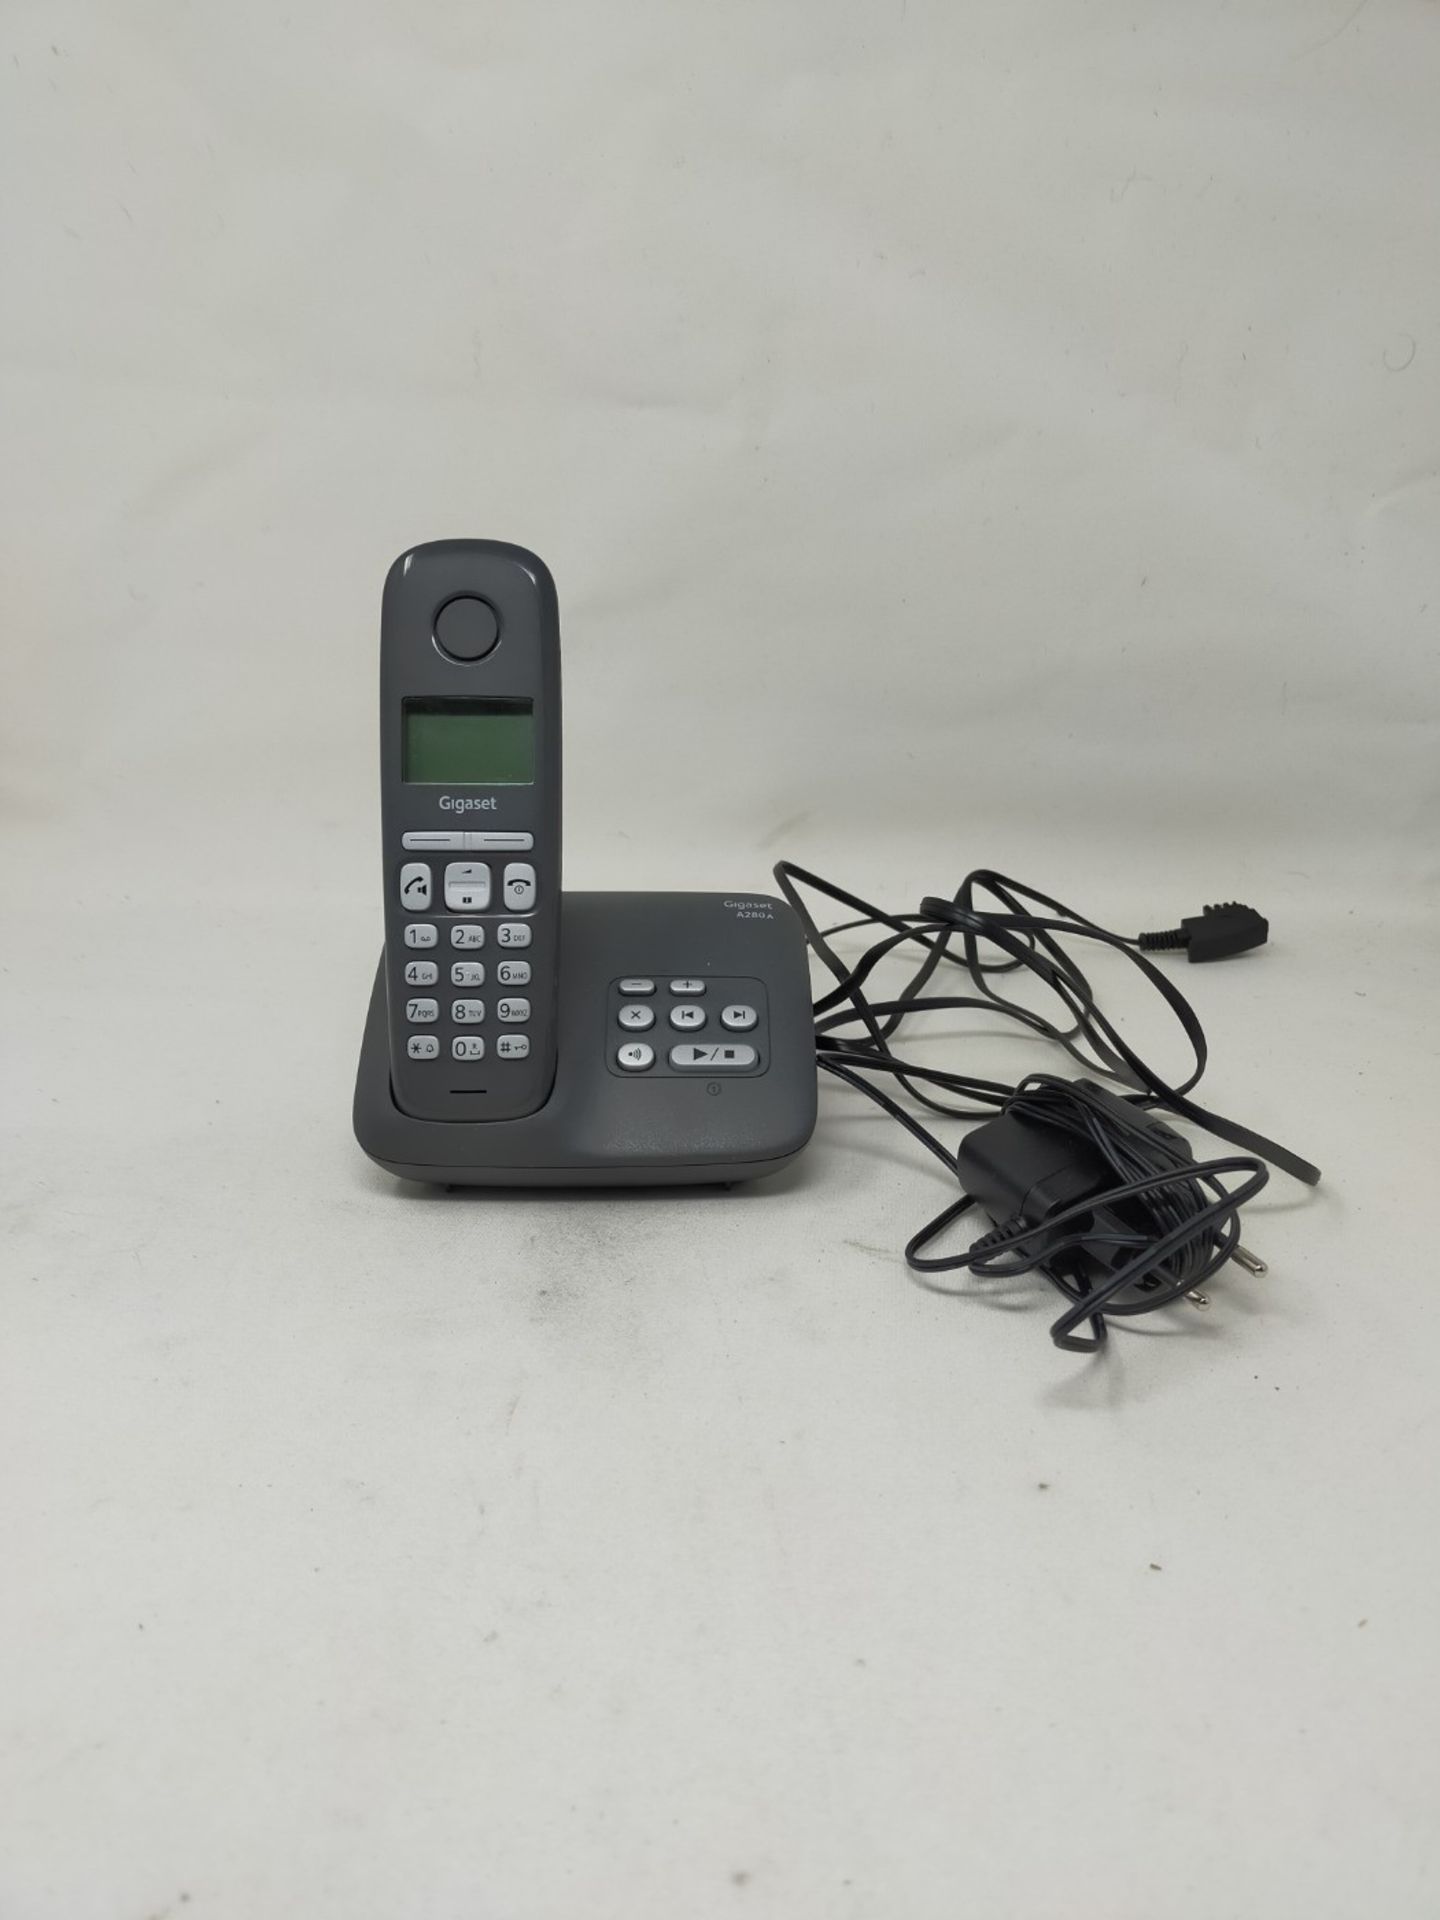 Gigaset A280A - Schnurloses Telefon mit Anrufbeantworter - brillante AudioqualitÃ¤t - Image 3 of 3